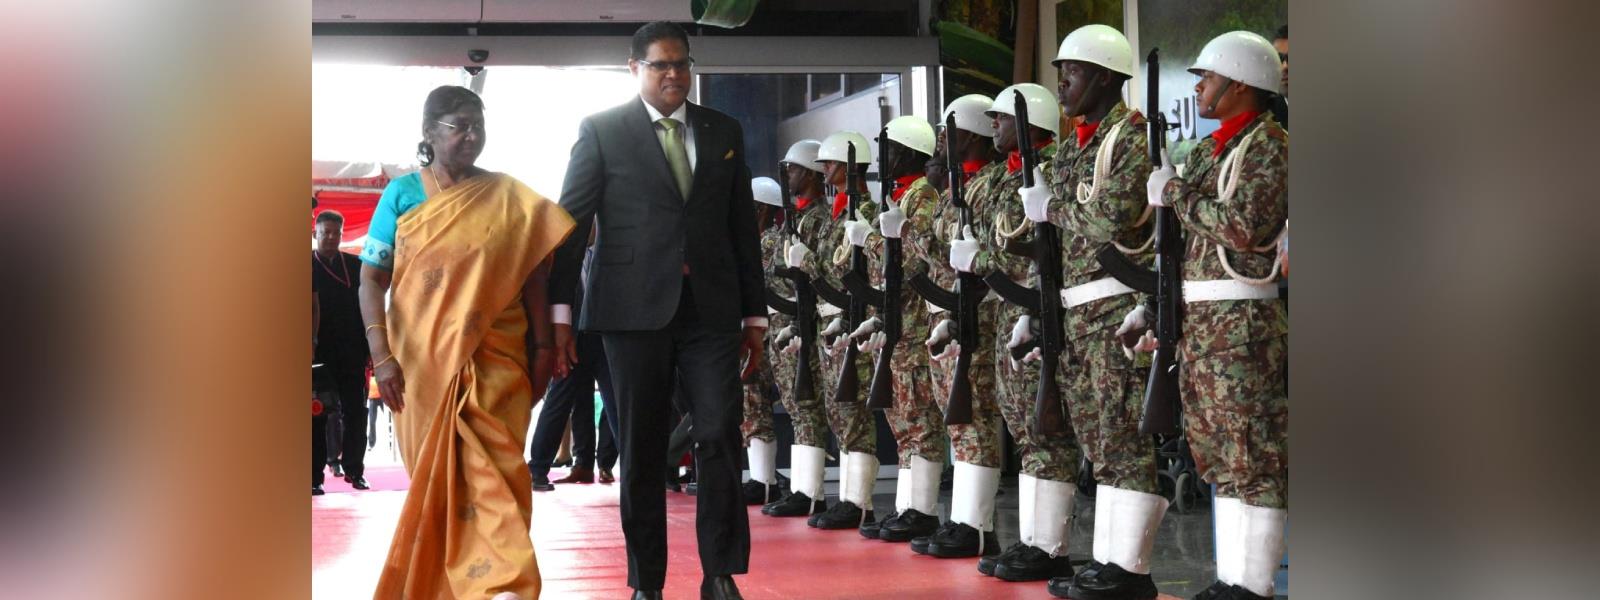 President Smt. Droupadi Murmu arrived in Paramaribo, Suriname on her first State Visit